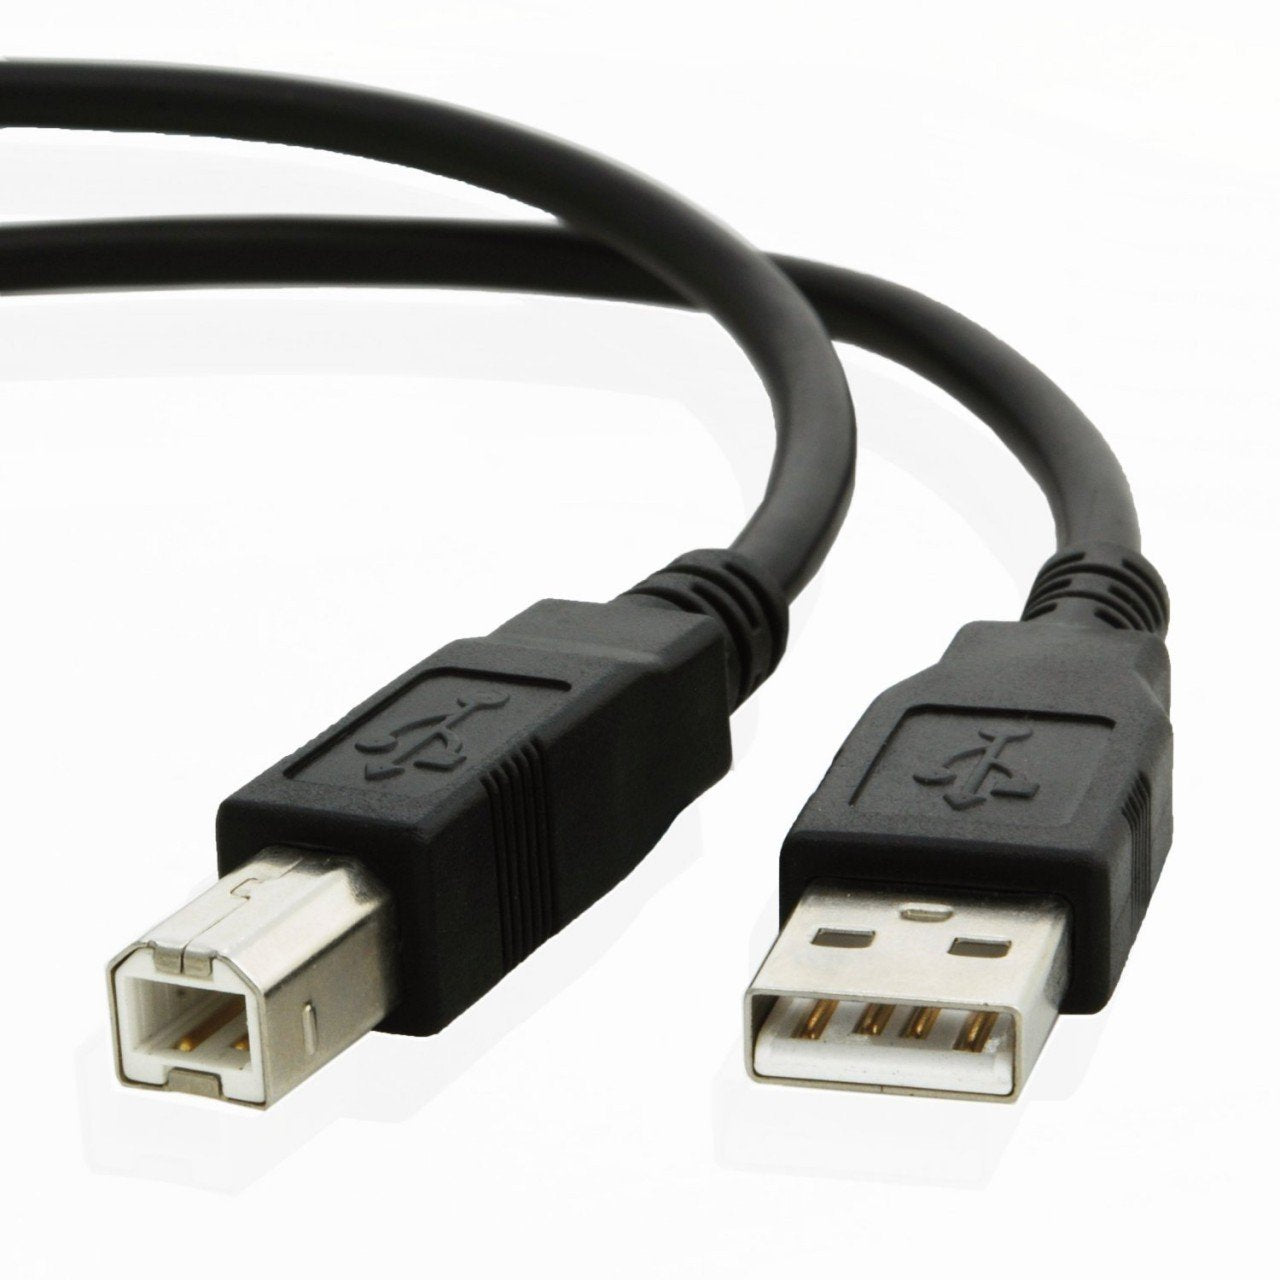 USB cable for Autel MAXISYS Mini